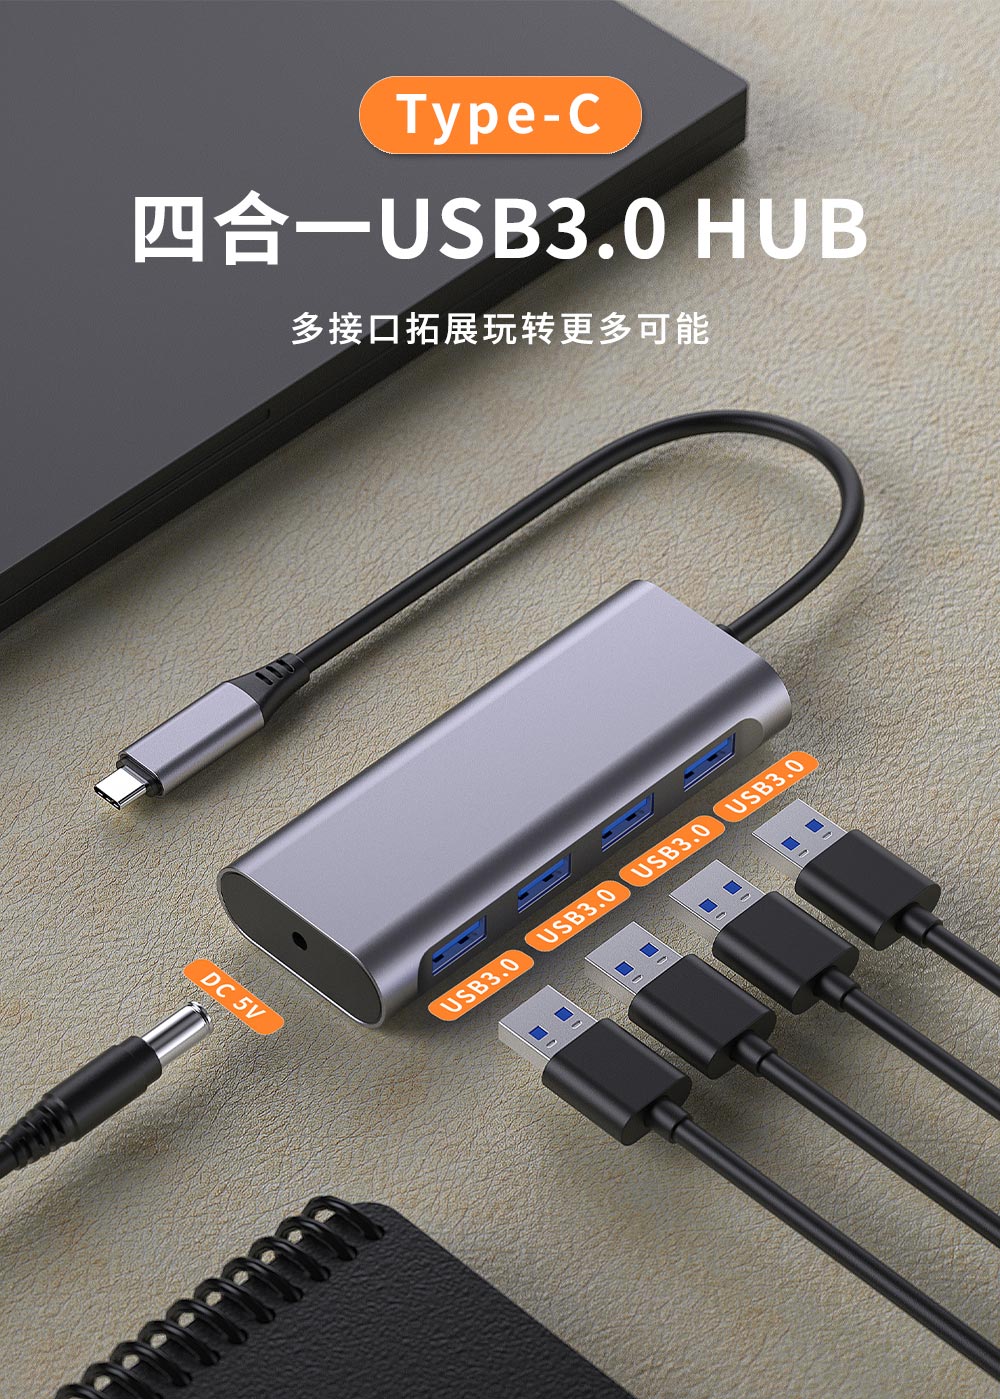 Type-C 4合1 USB3.0 HUB拓展坞